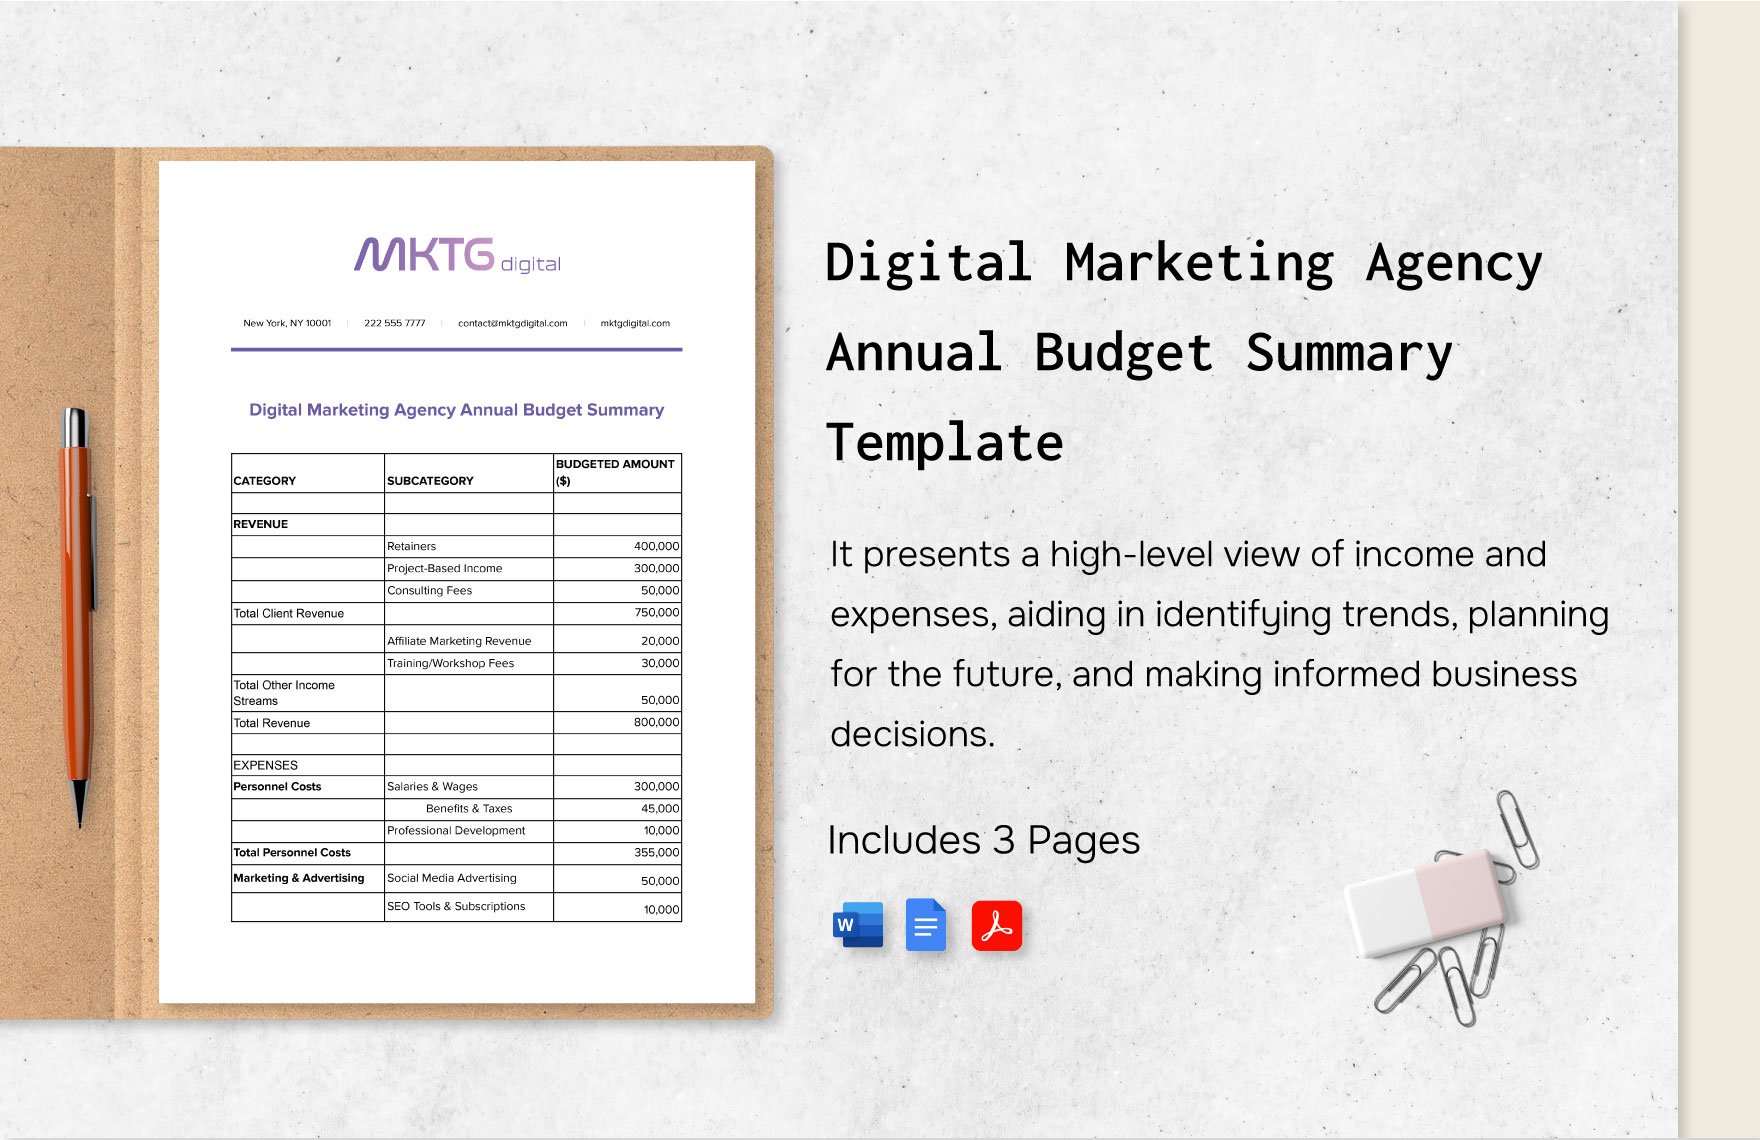 Digital Marketing Agency Annual Budget Summary Template